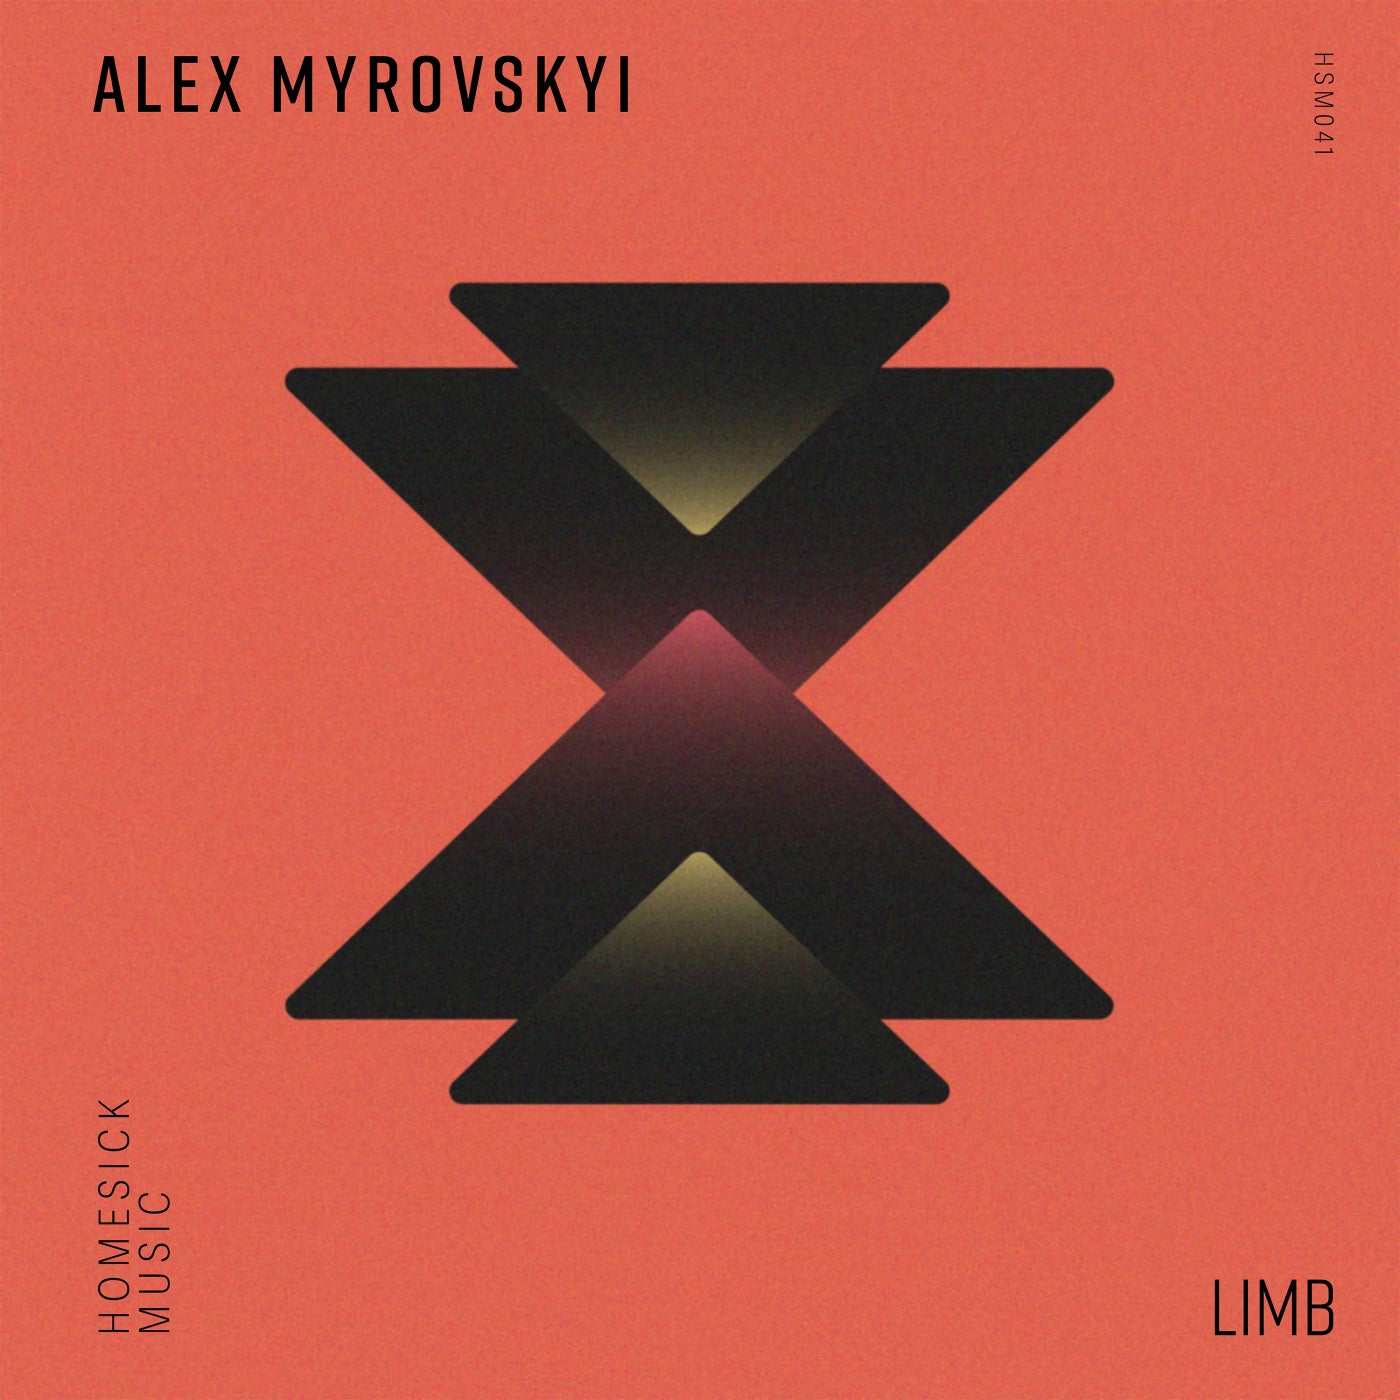 Alex Myrovskyi – Limb [HSM041]